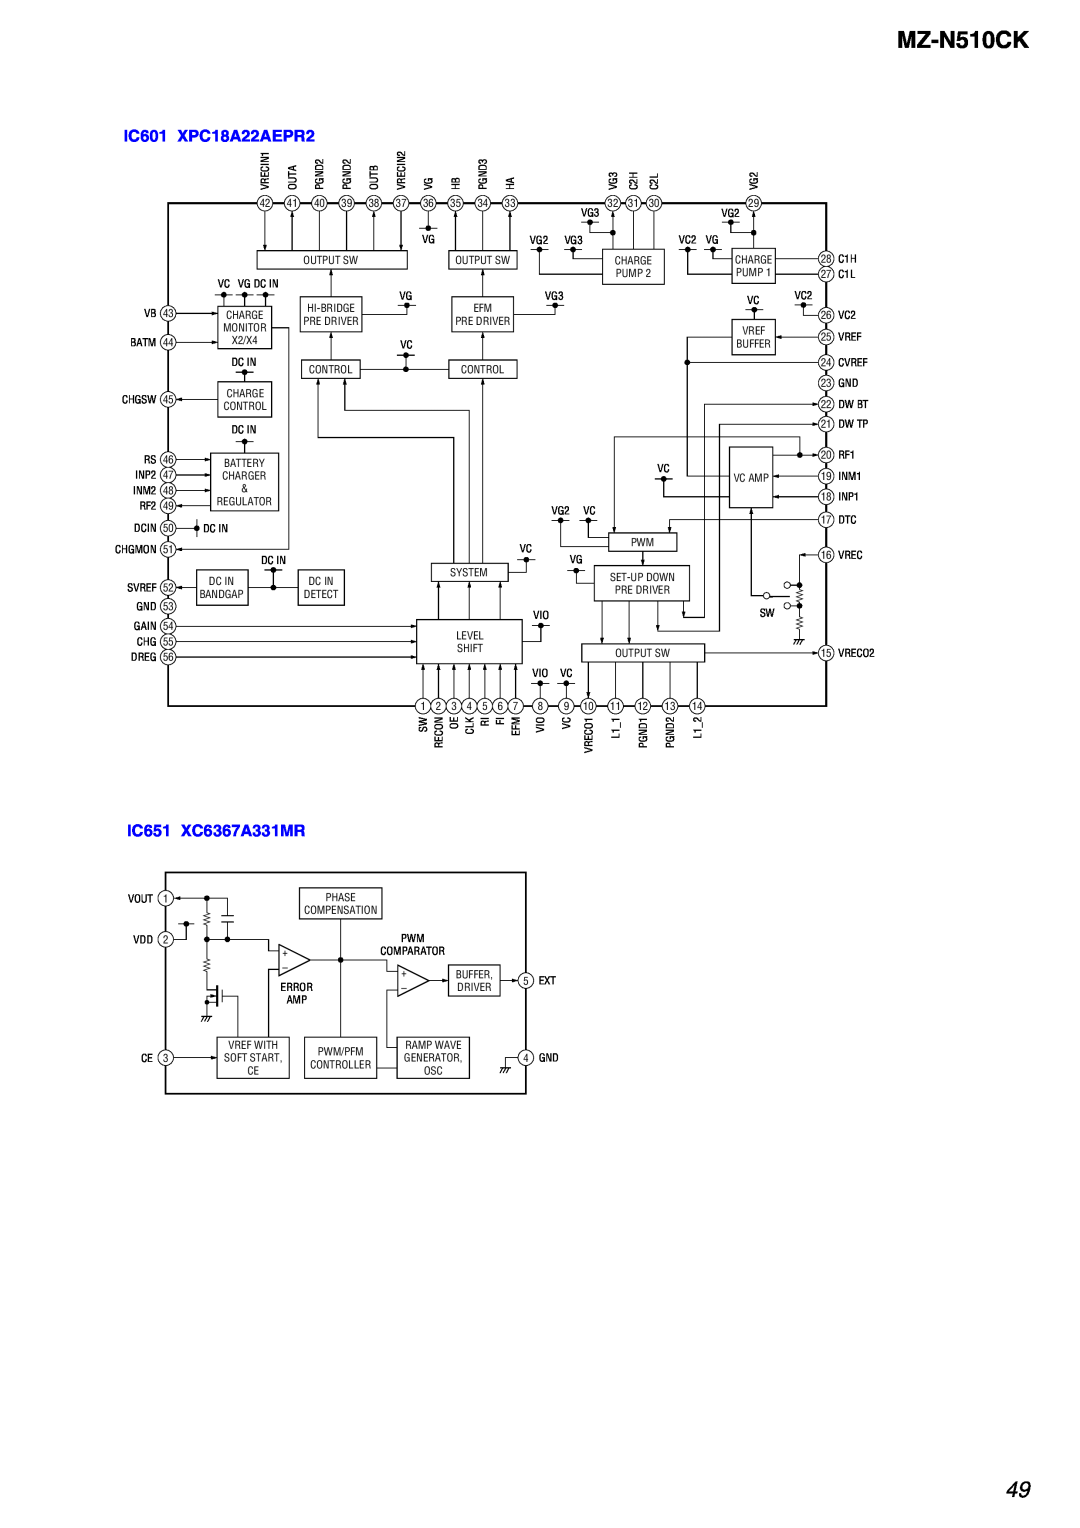 Sony MZ-N510CK service manual IC601 XPC18A22AEPR2, IC651 XC6367A331MR 